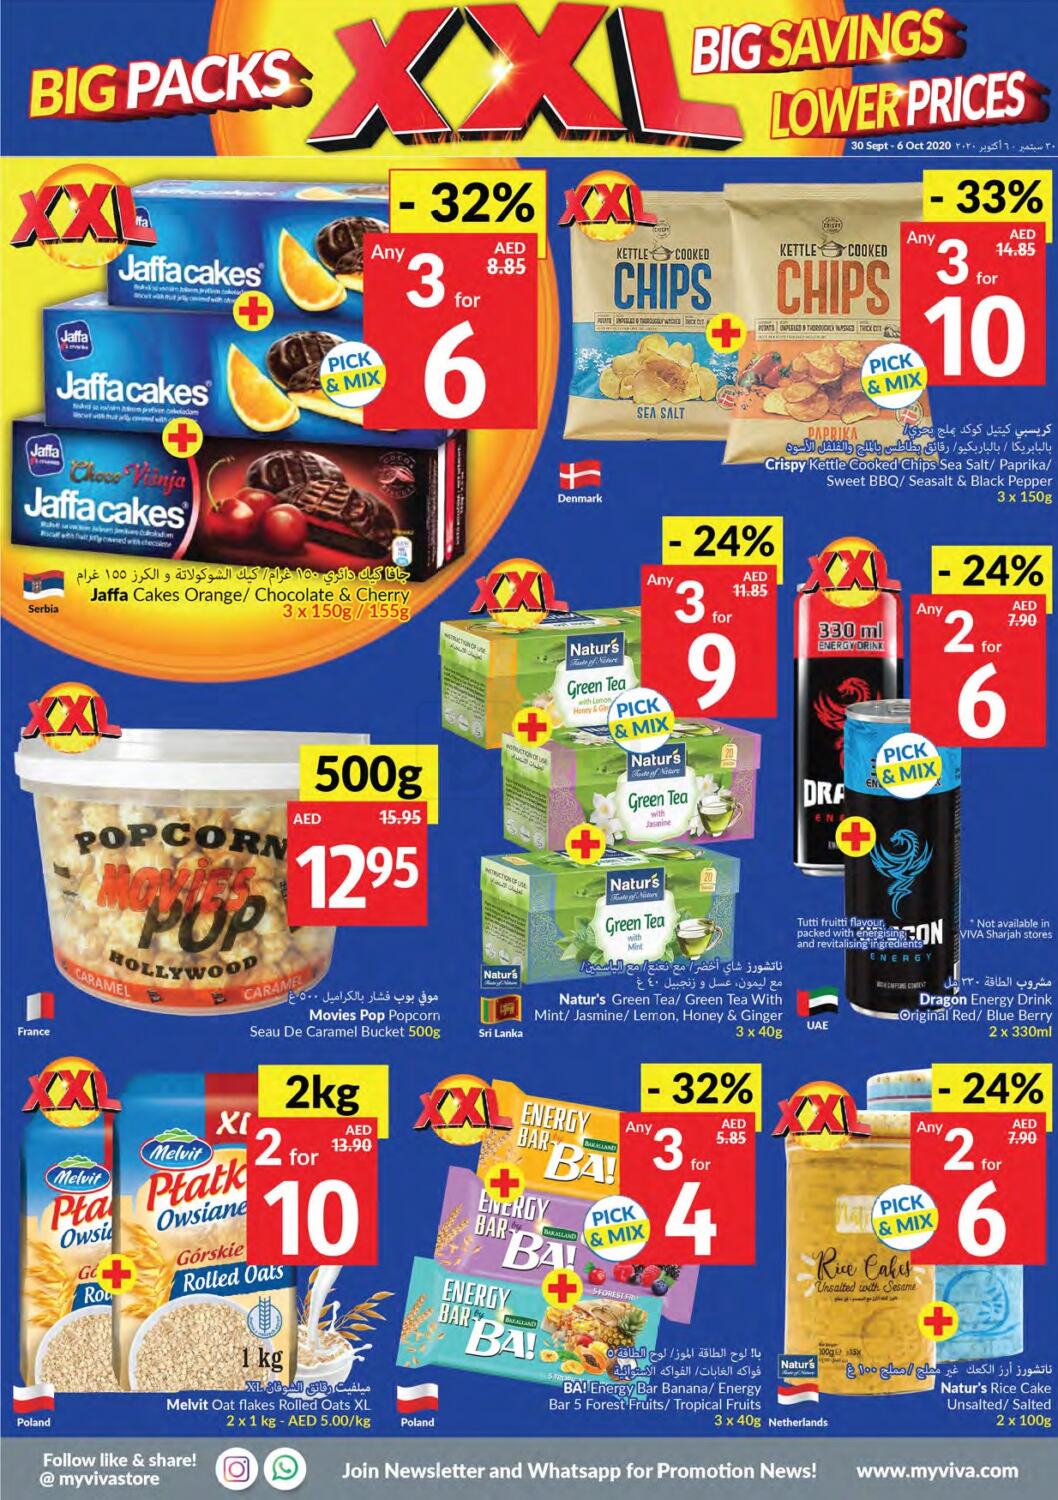 Viva Supermarket XXL Offers in UAE Offers  United Arab Emirates. Till